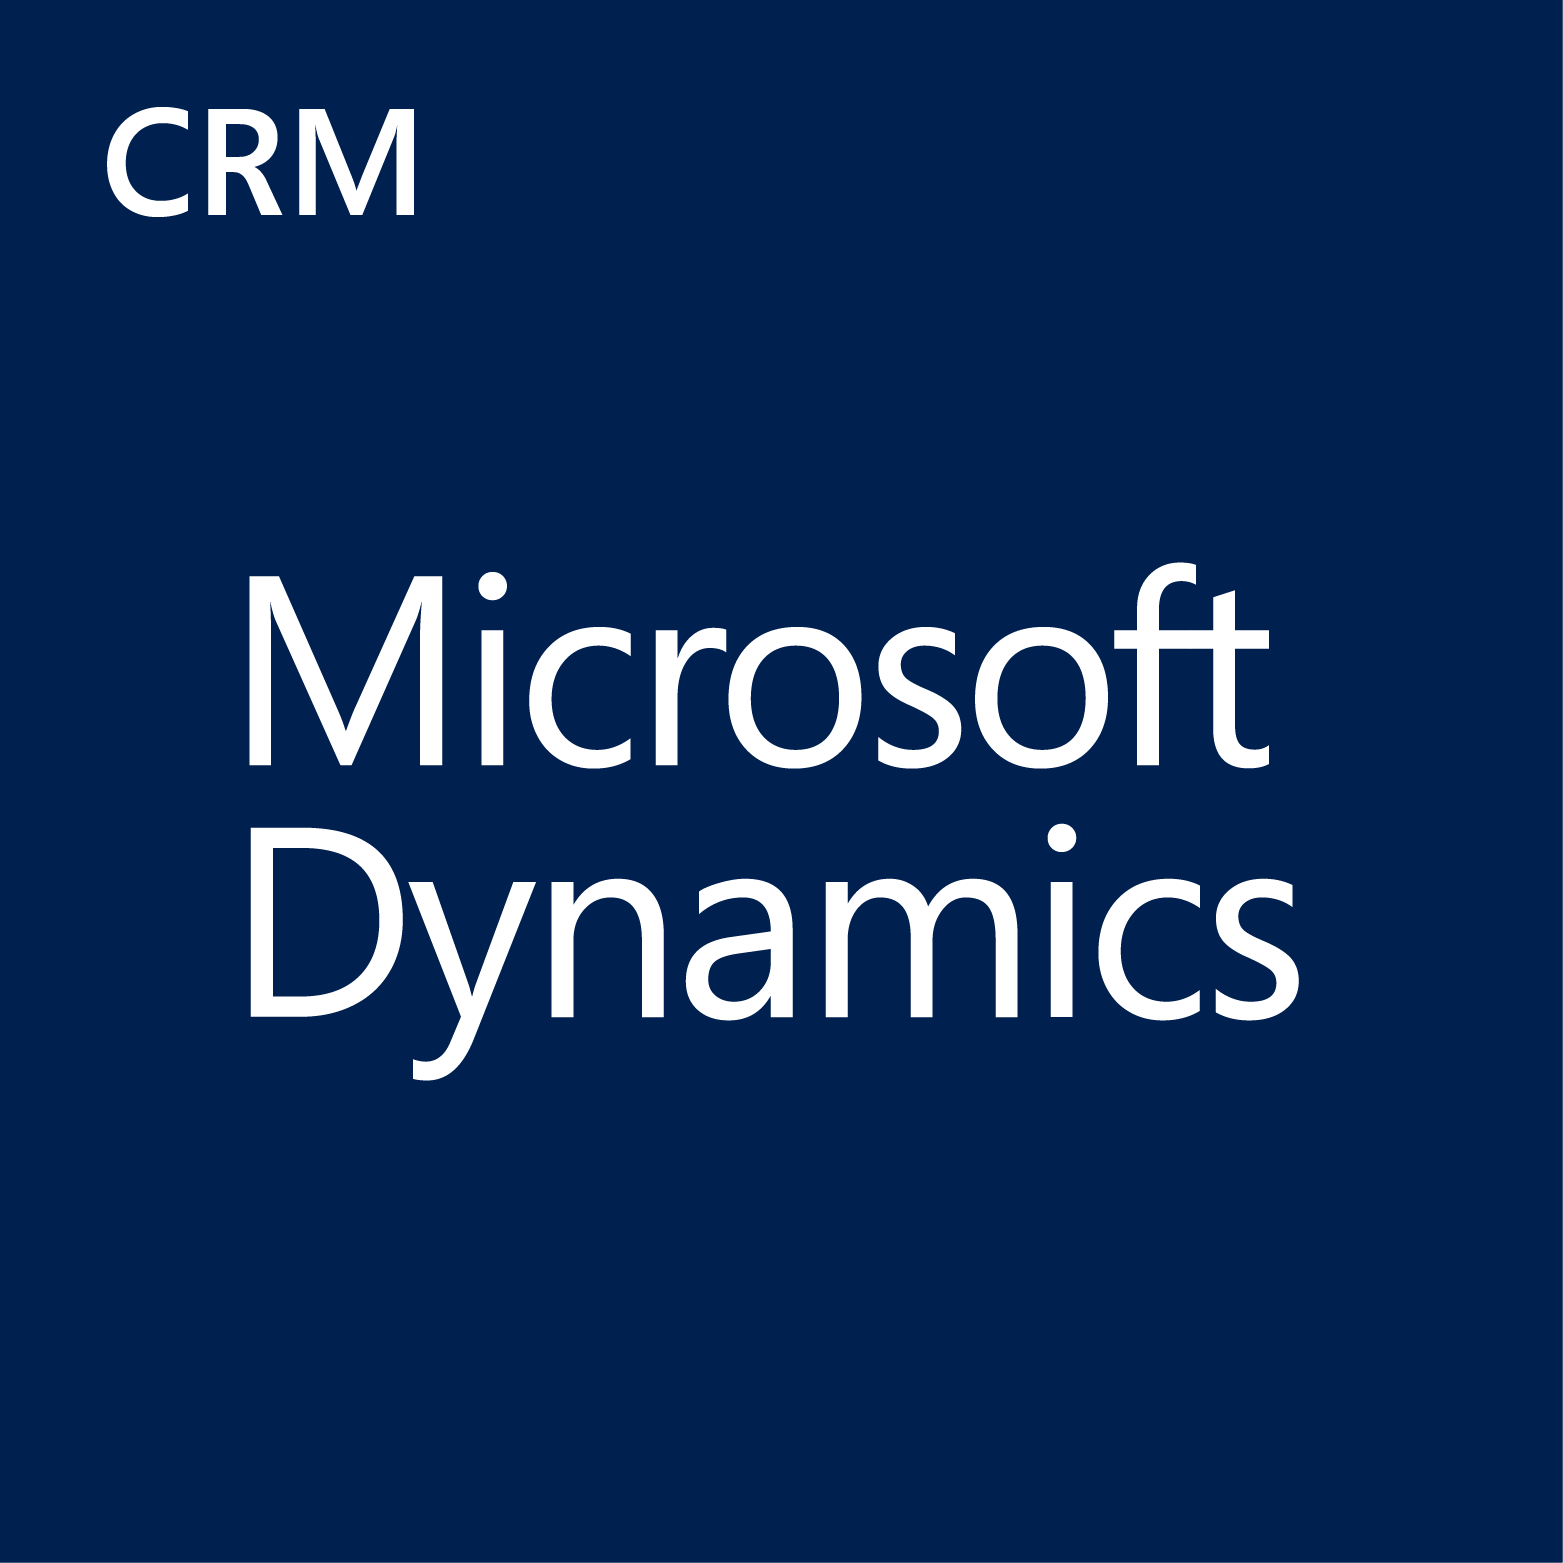 Dynamics CRM Logo - Microsoft Dynamics CRM. Corporate Renaissance Group